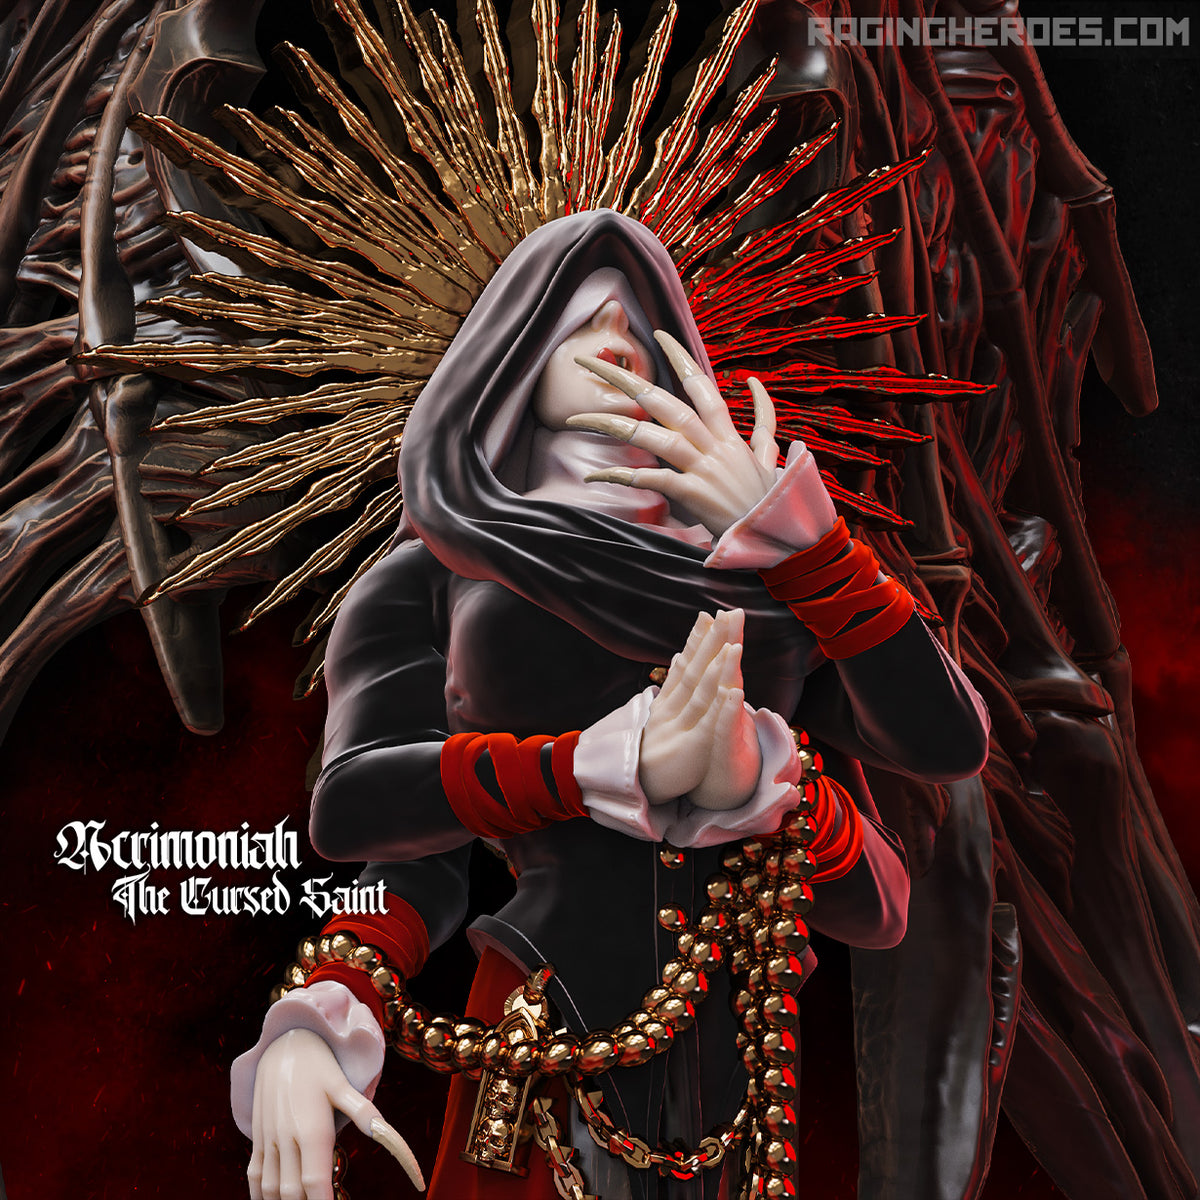 Acrimoniah, The Cursed Saint (Vampires - F) - Raging Heroes